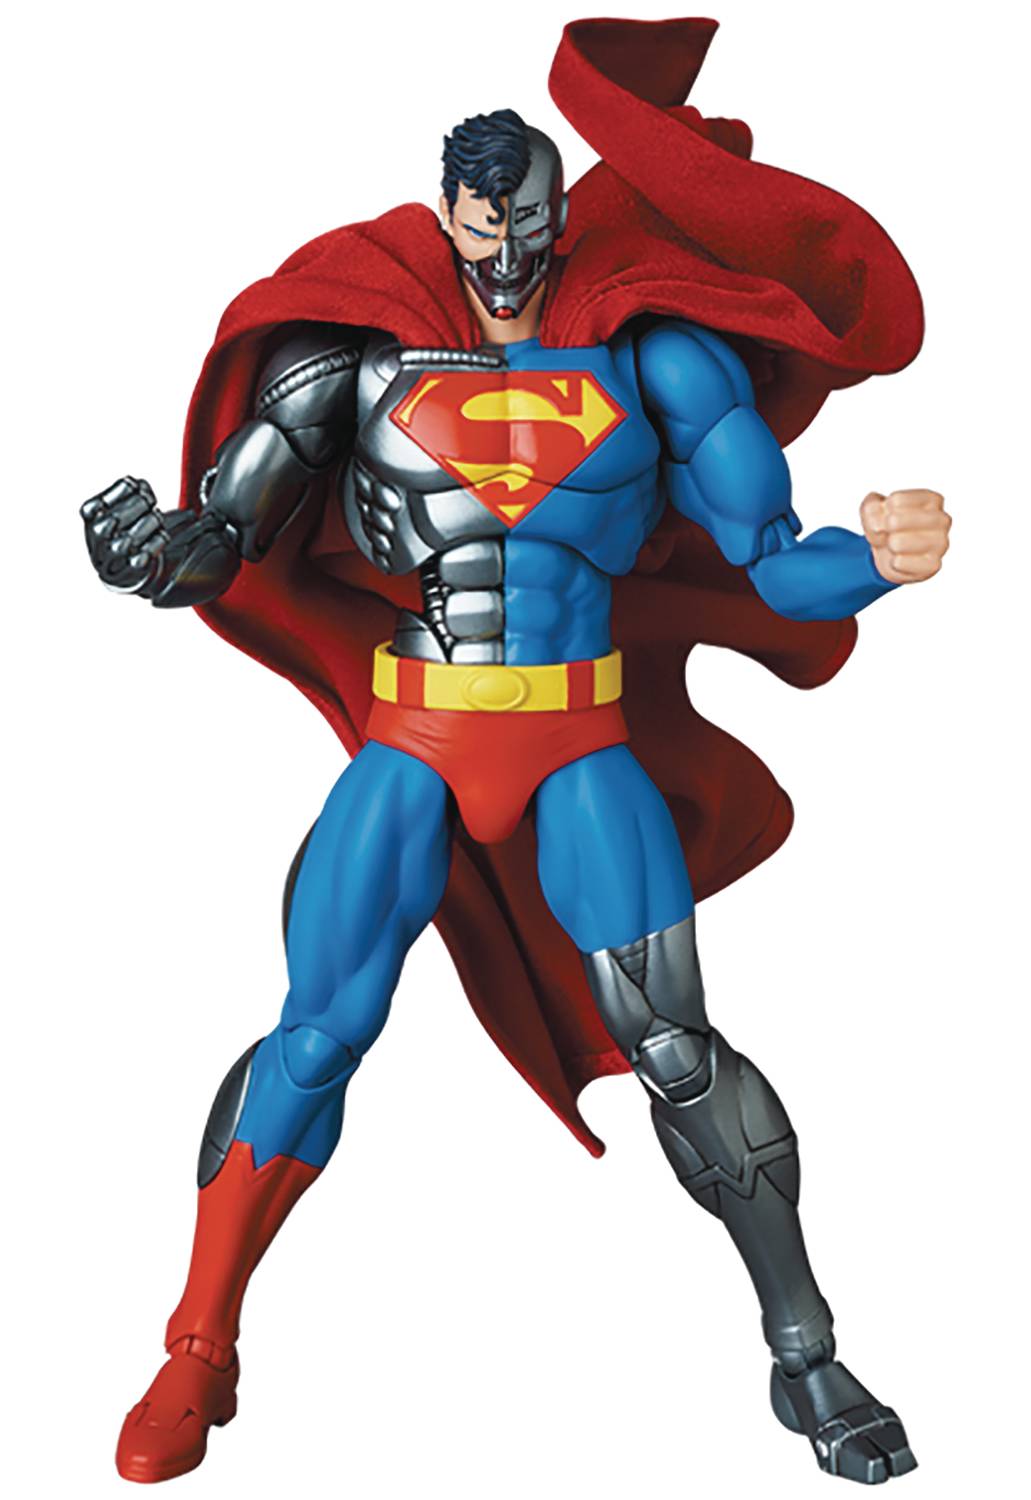 MAFEX: DC - Cyborg Superman (Return of Superman)